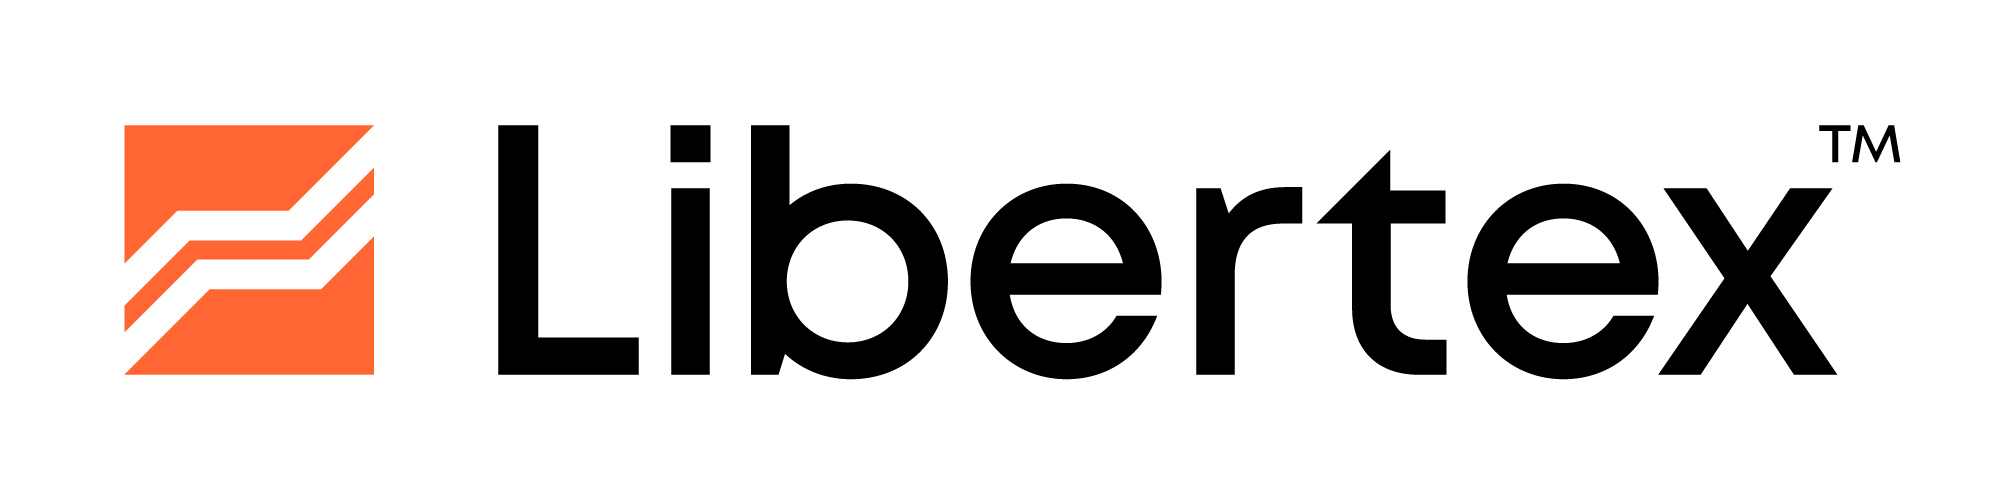 libertex logo kicsi